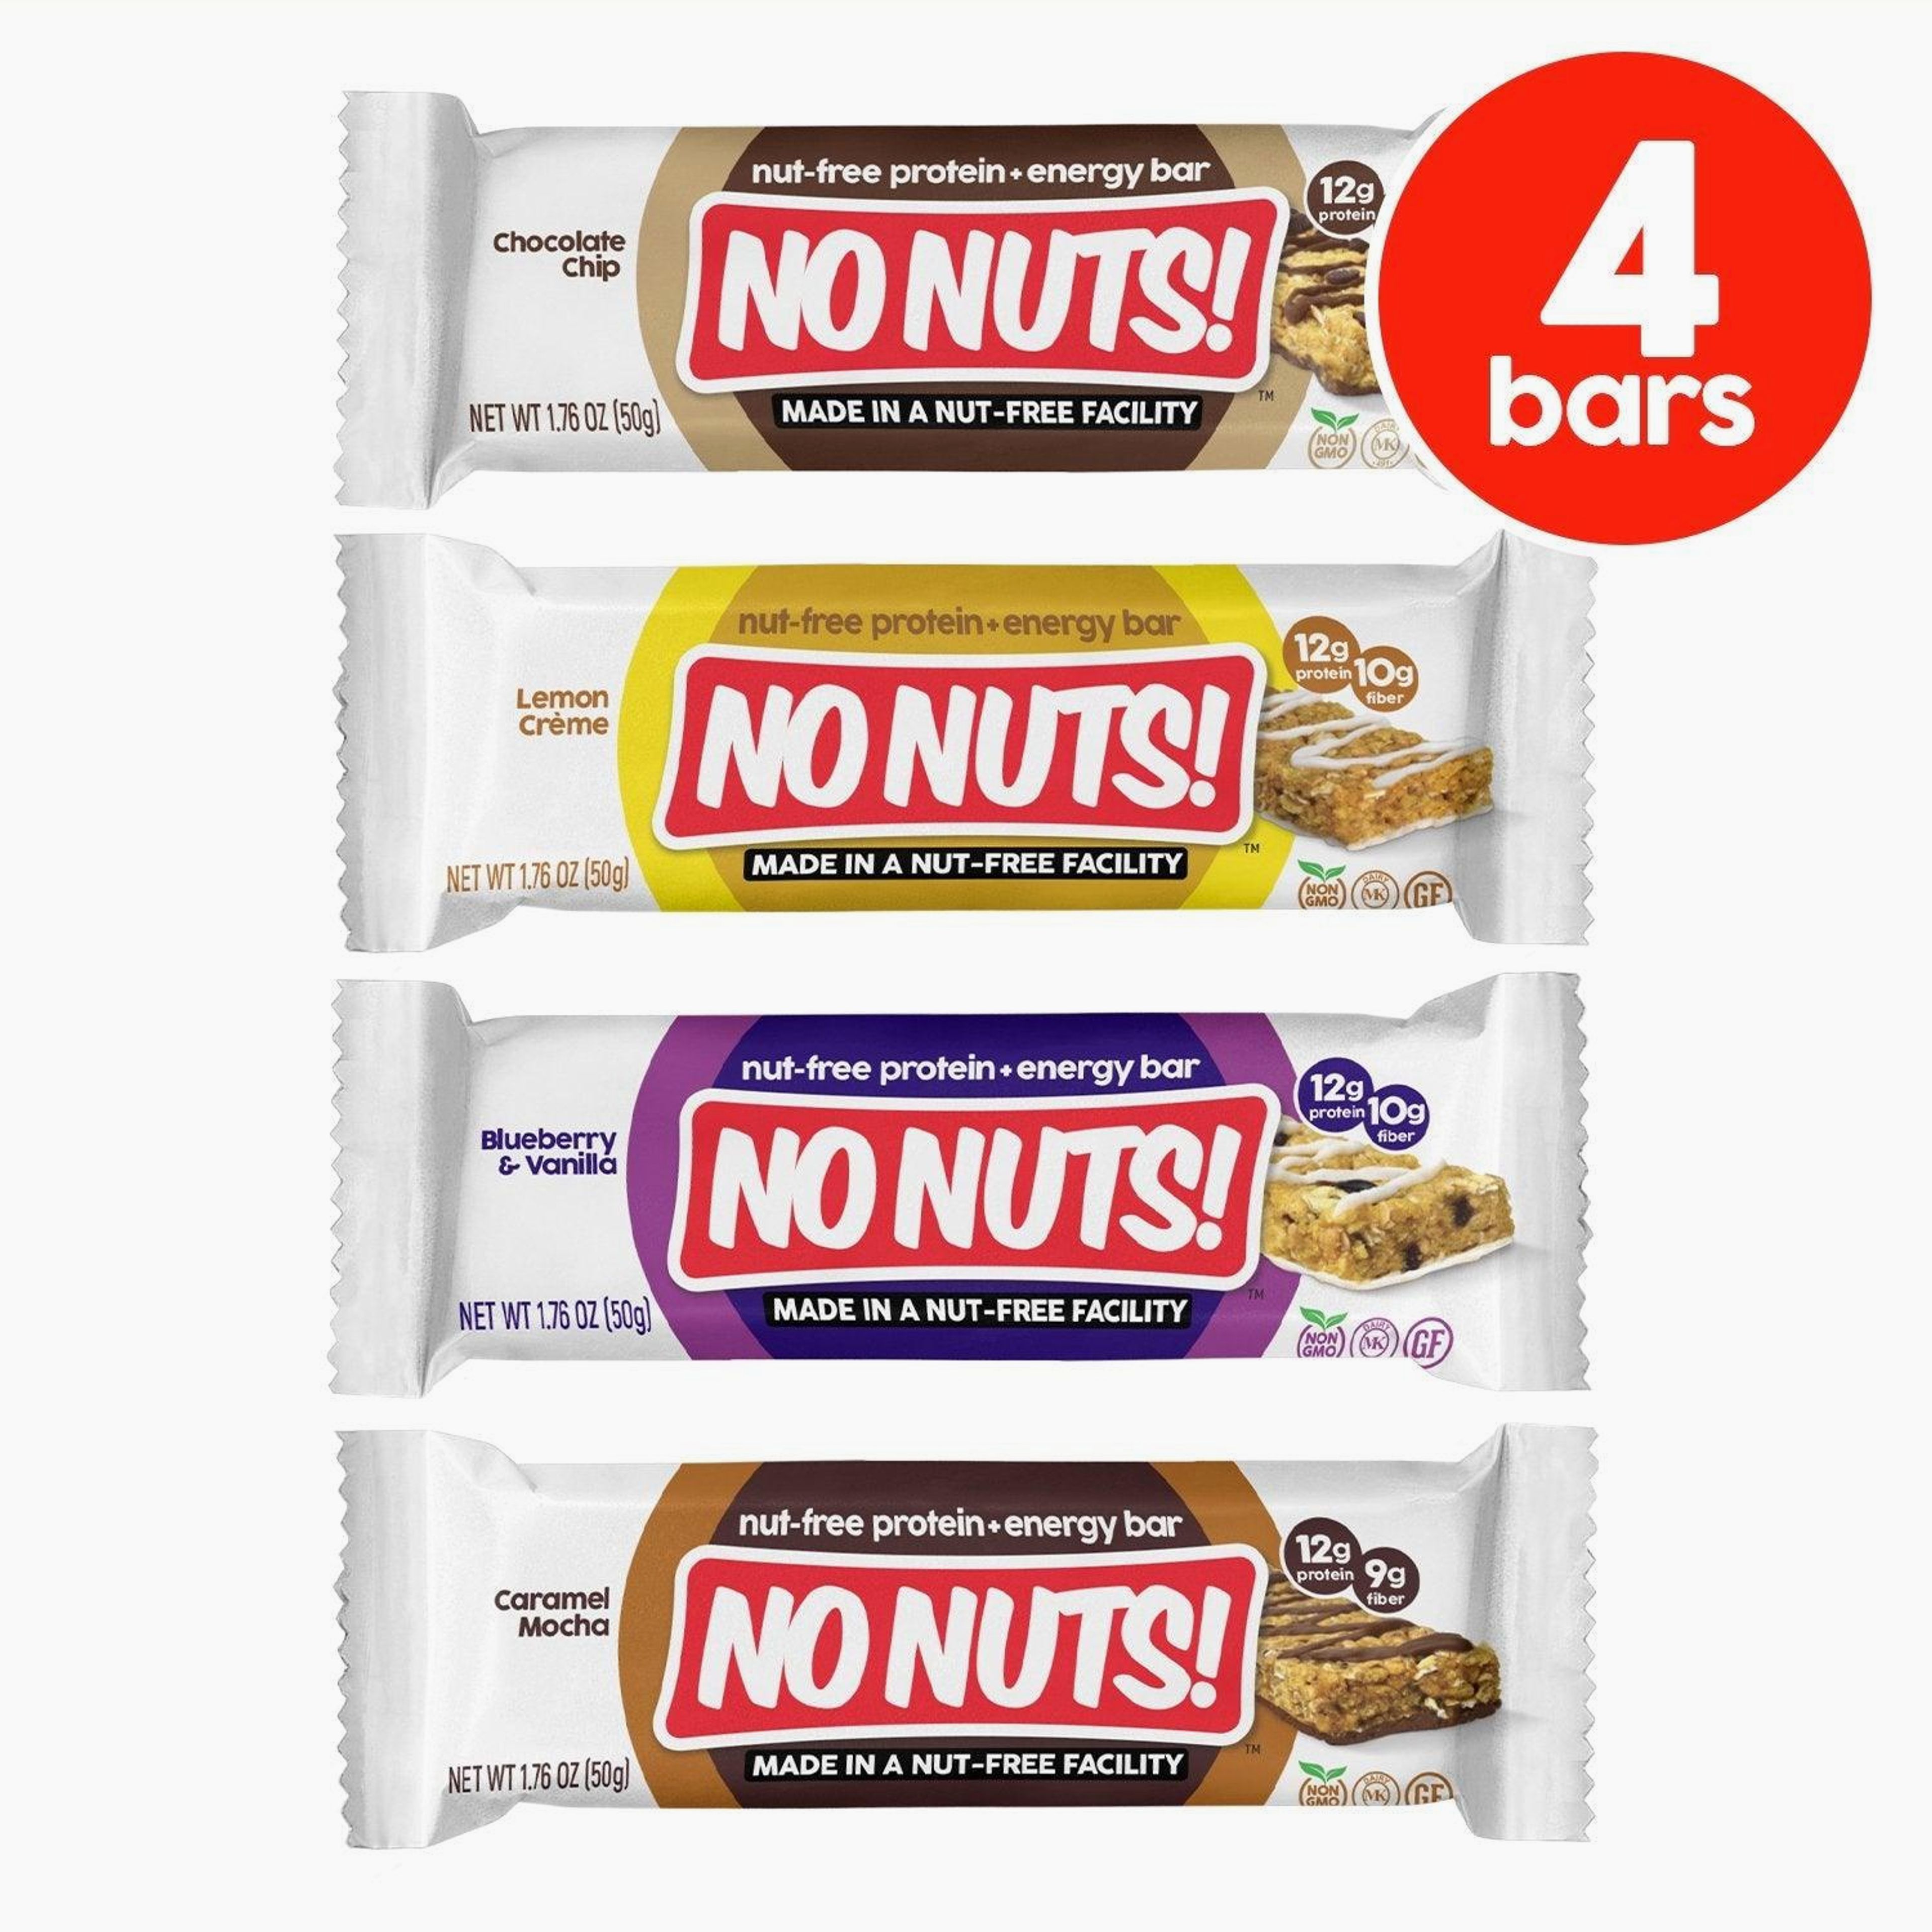 No Nuts! 4-Pack Sampler - Chocolate Chip, Lemon Creme, Blueberry & Vanilla and Caramel Mocha